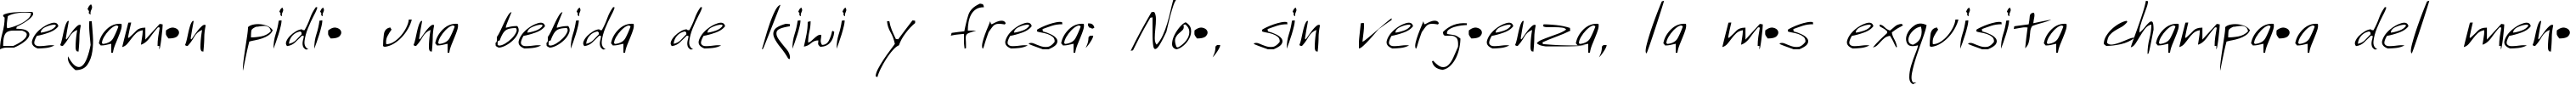 Пример написания шрифтом Stan's Hand текста на испанском